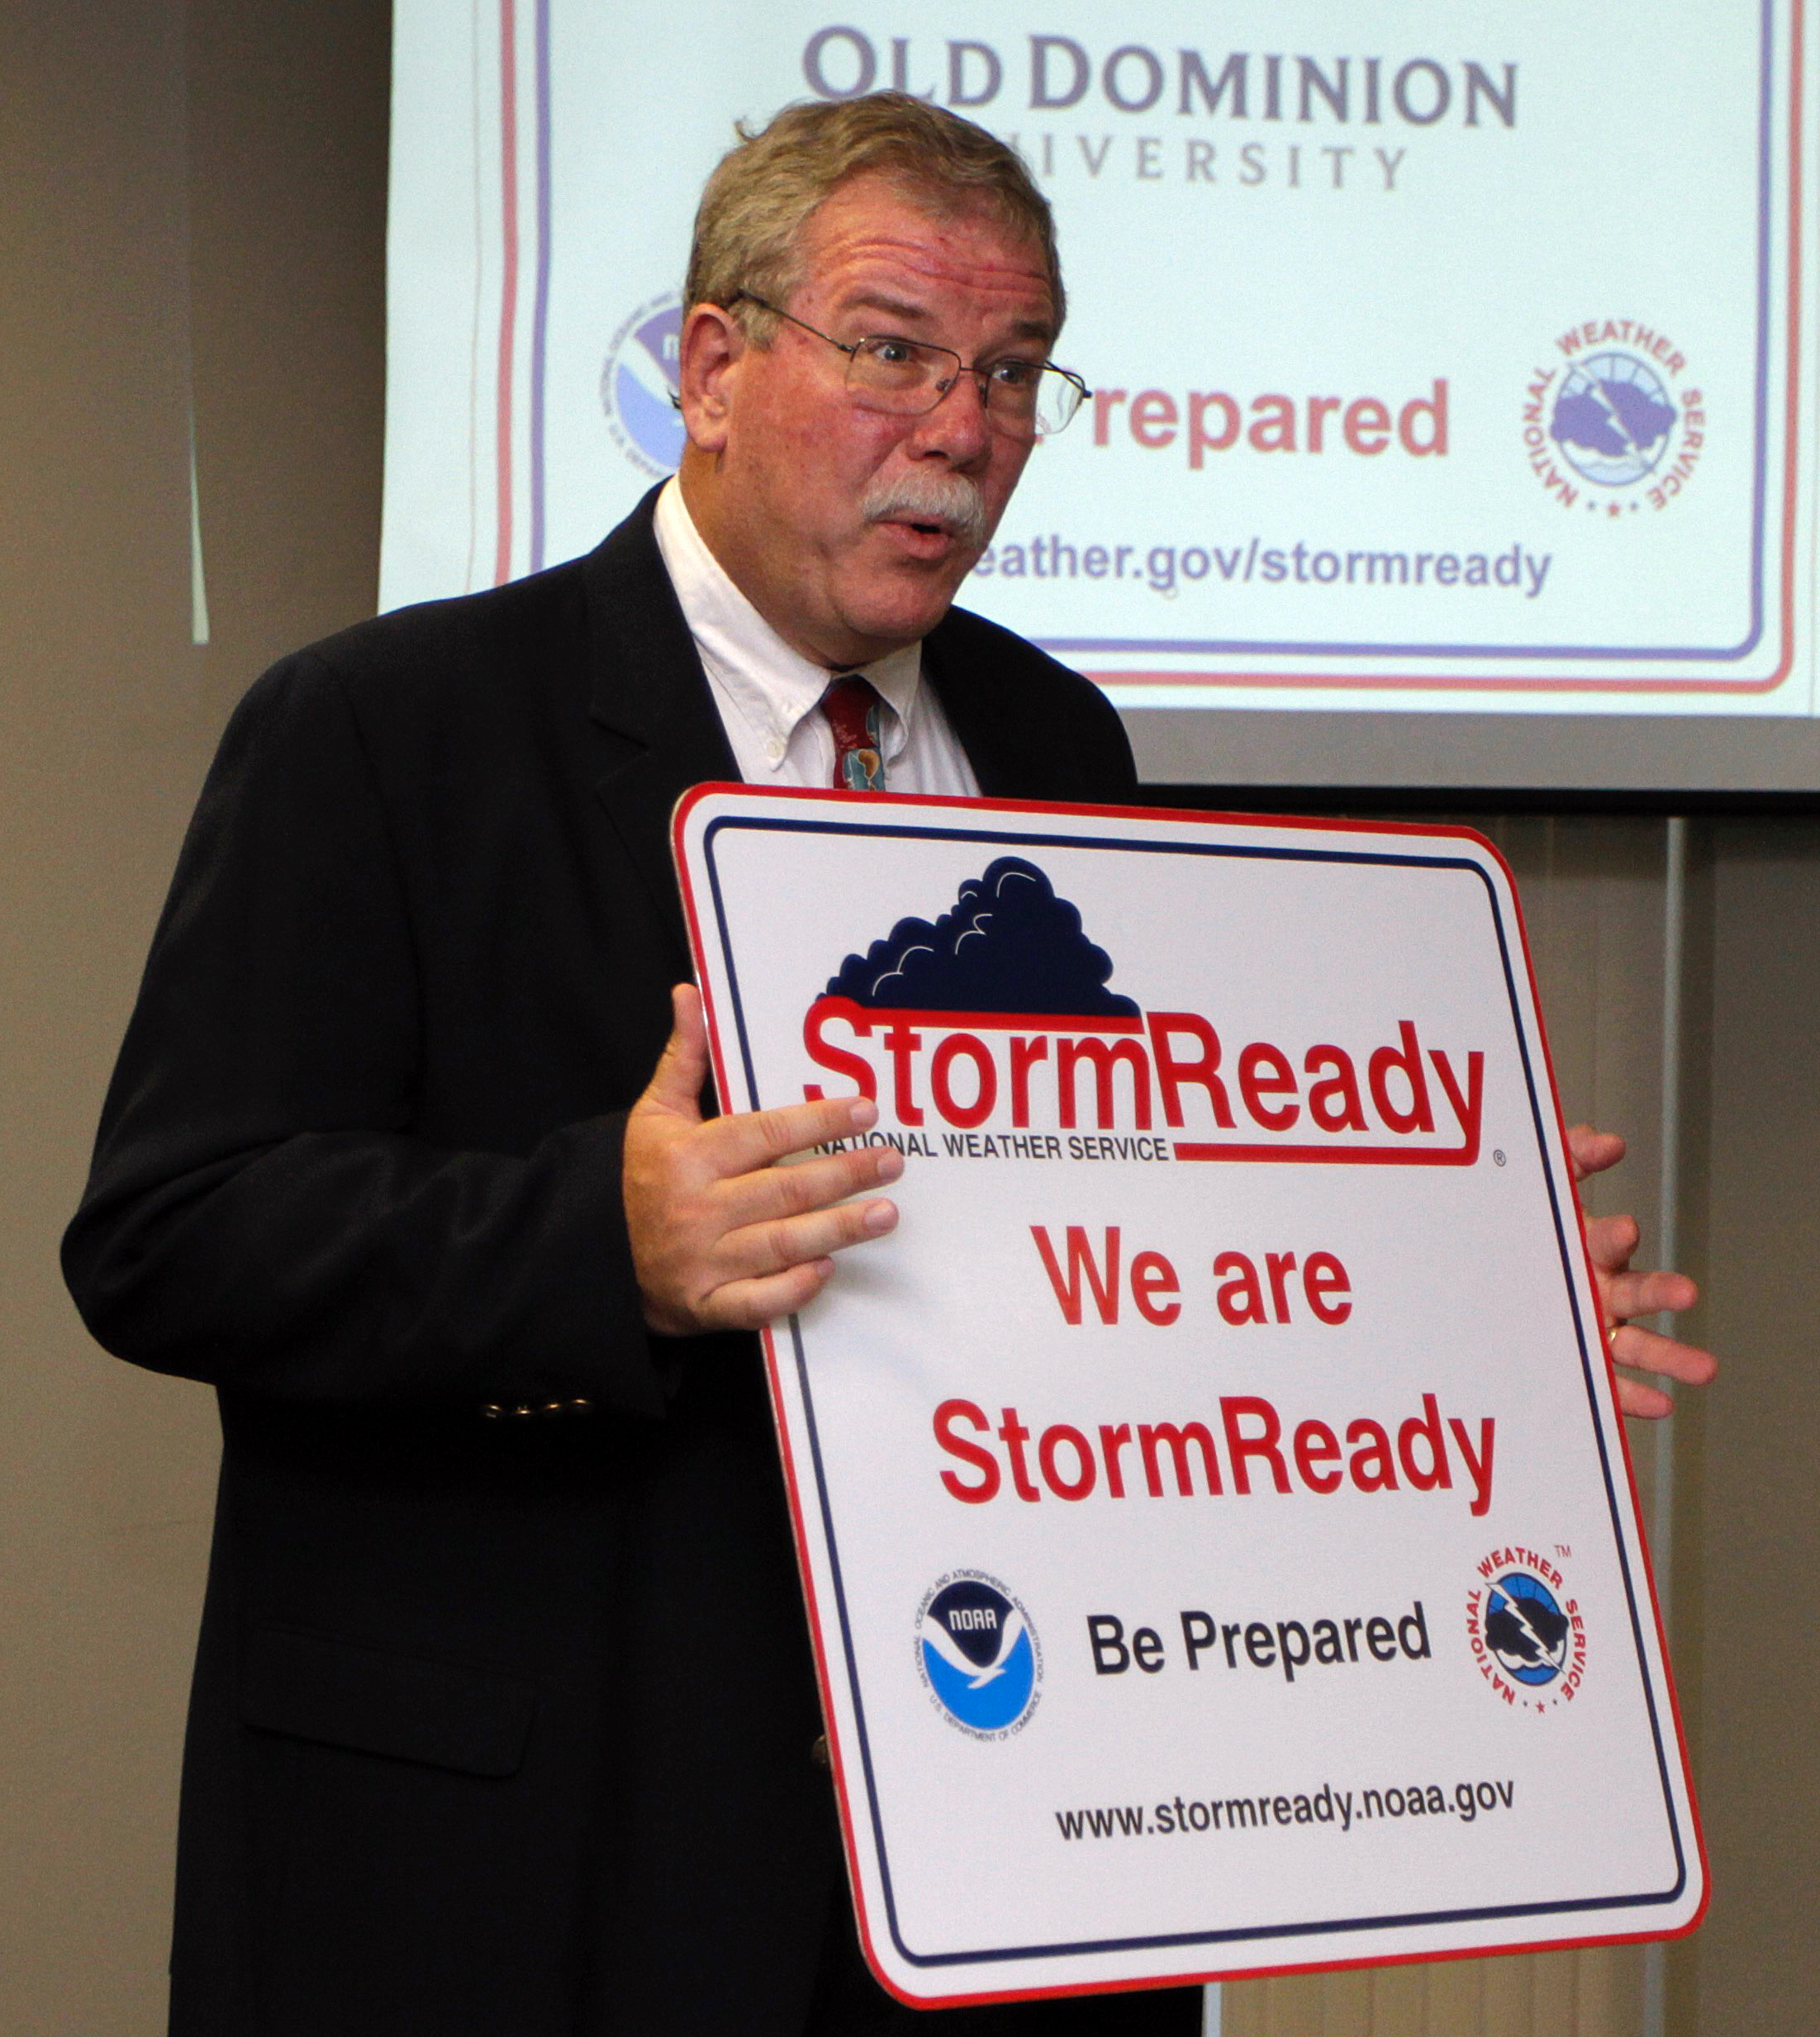 Storm Ready Designation Award